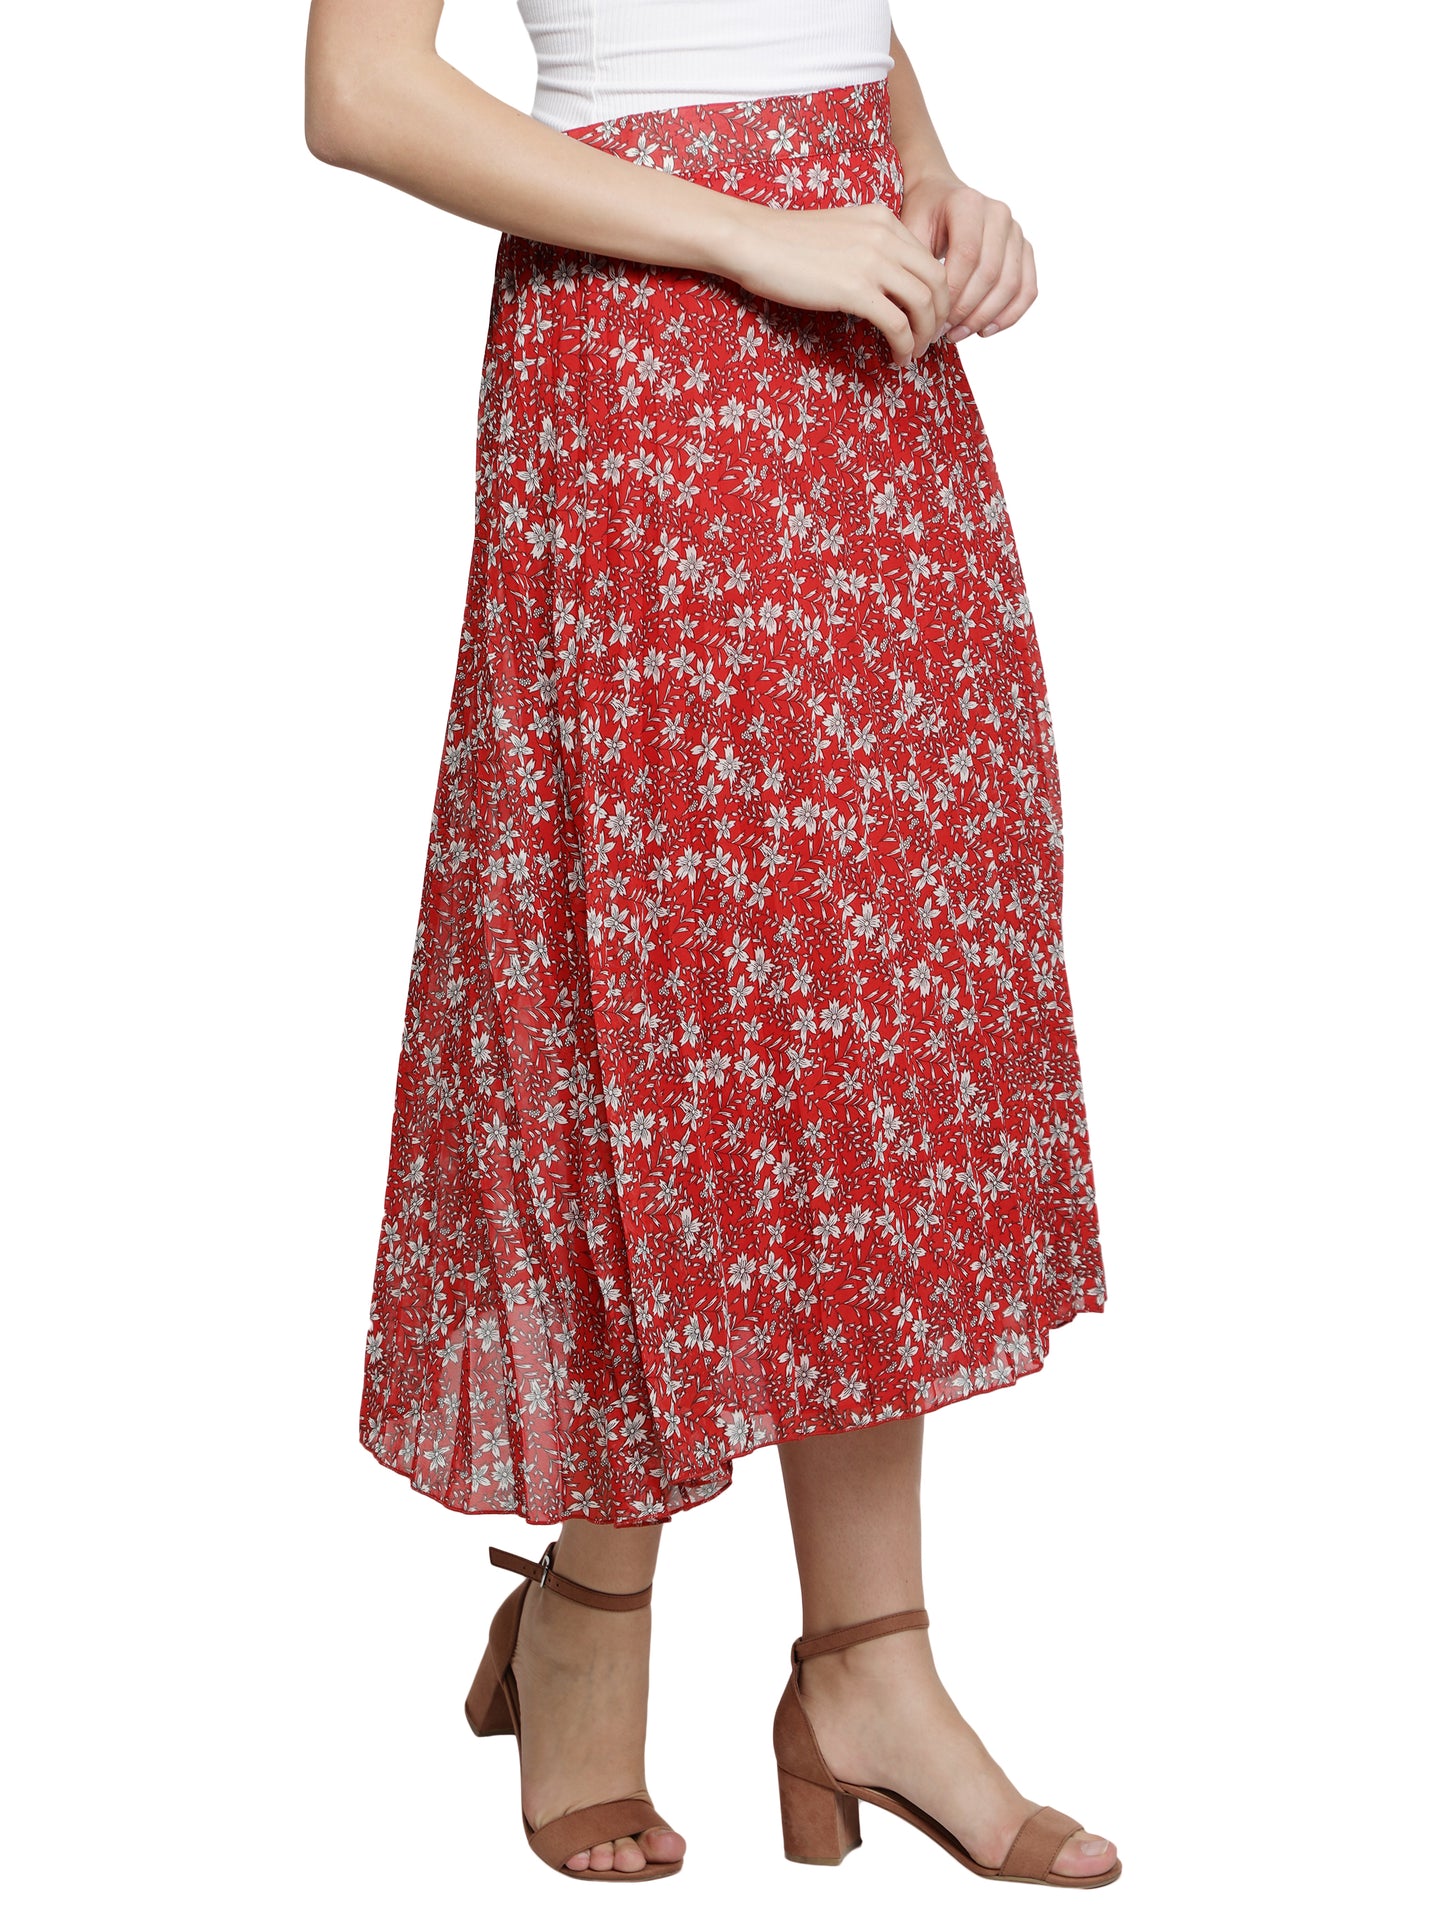 Women Floral Print Pleated Red Skirt freeshipping - NUEVOSDAMAS